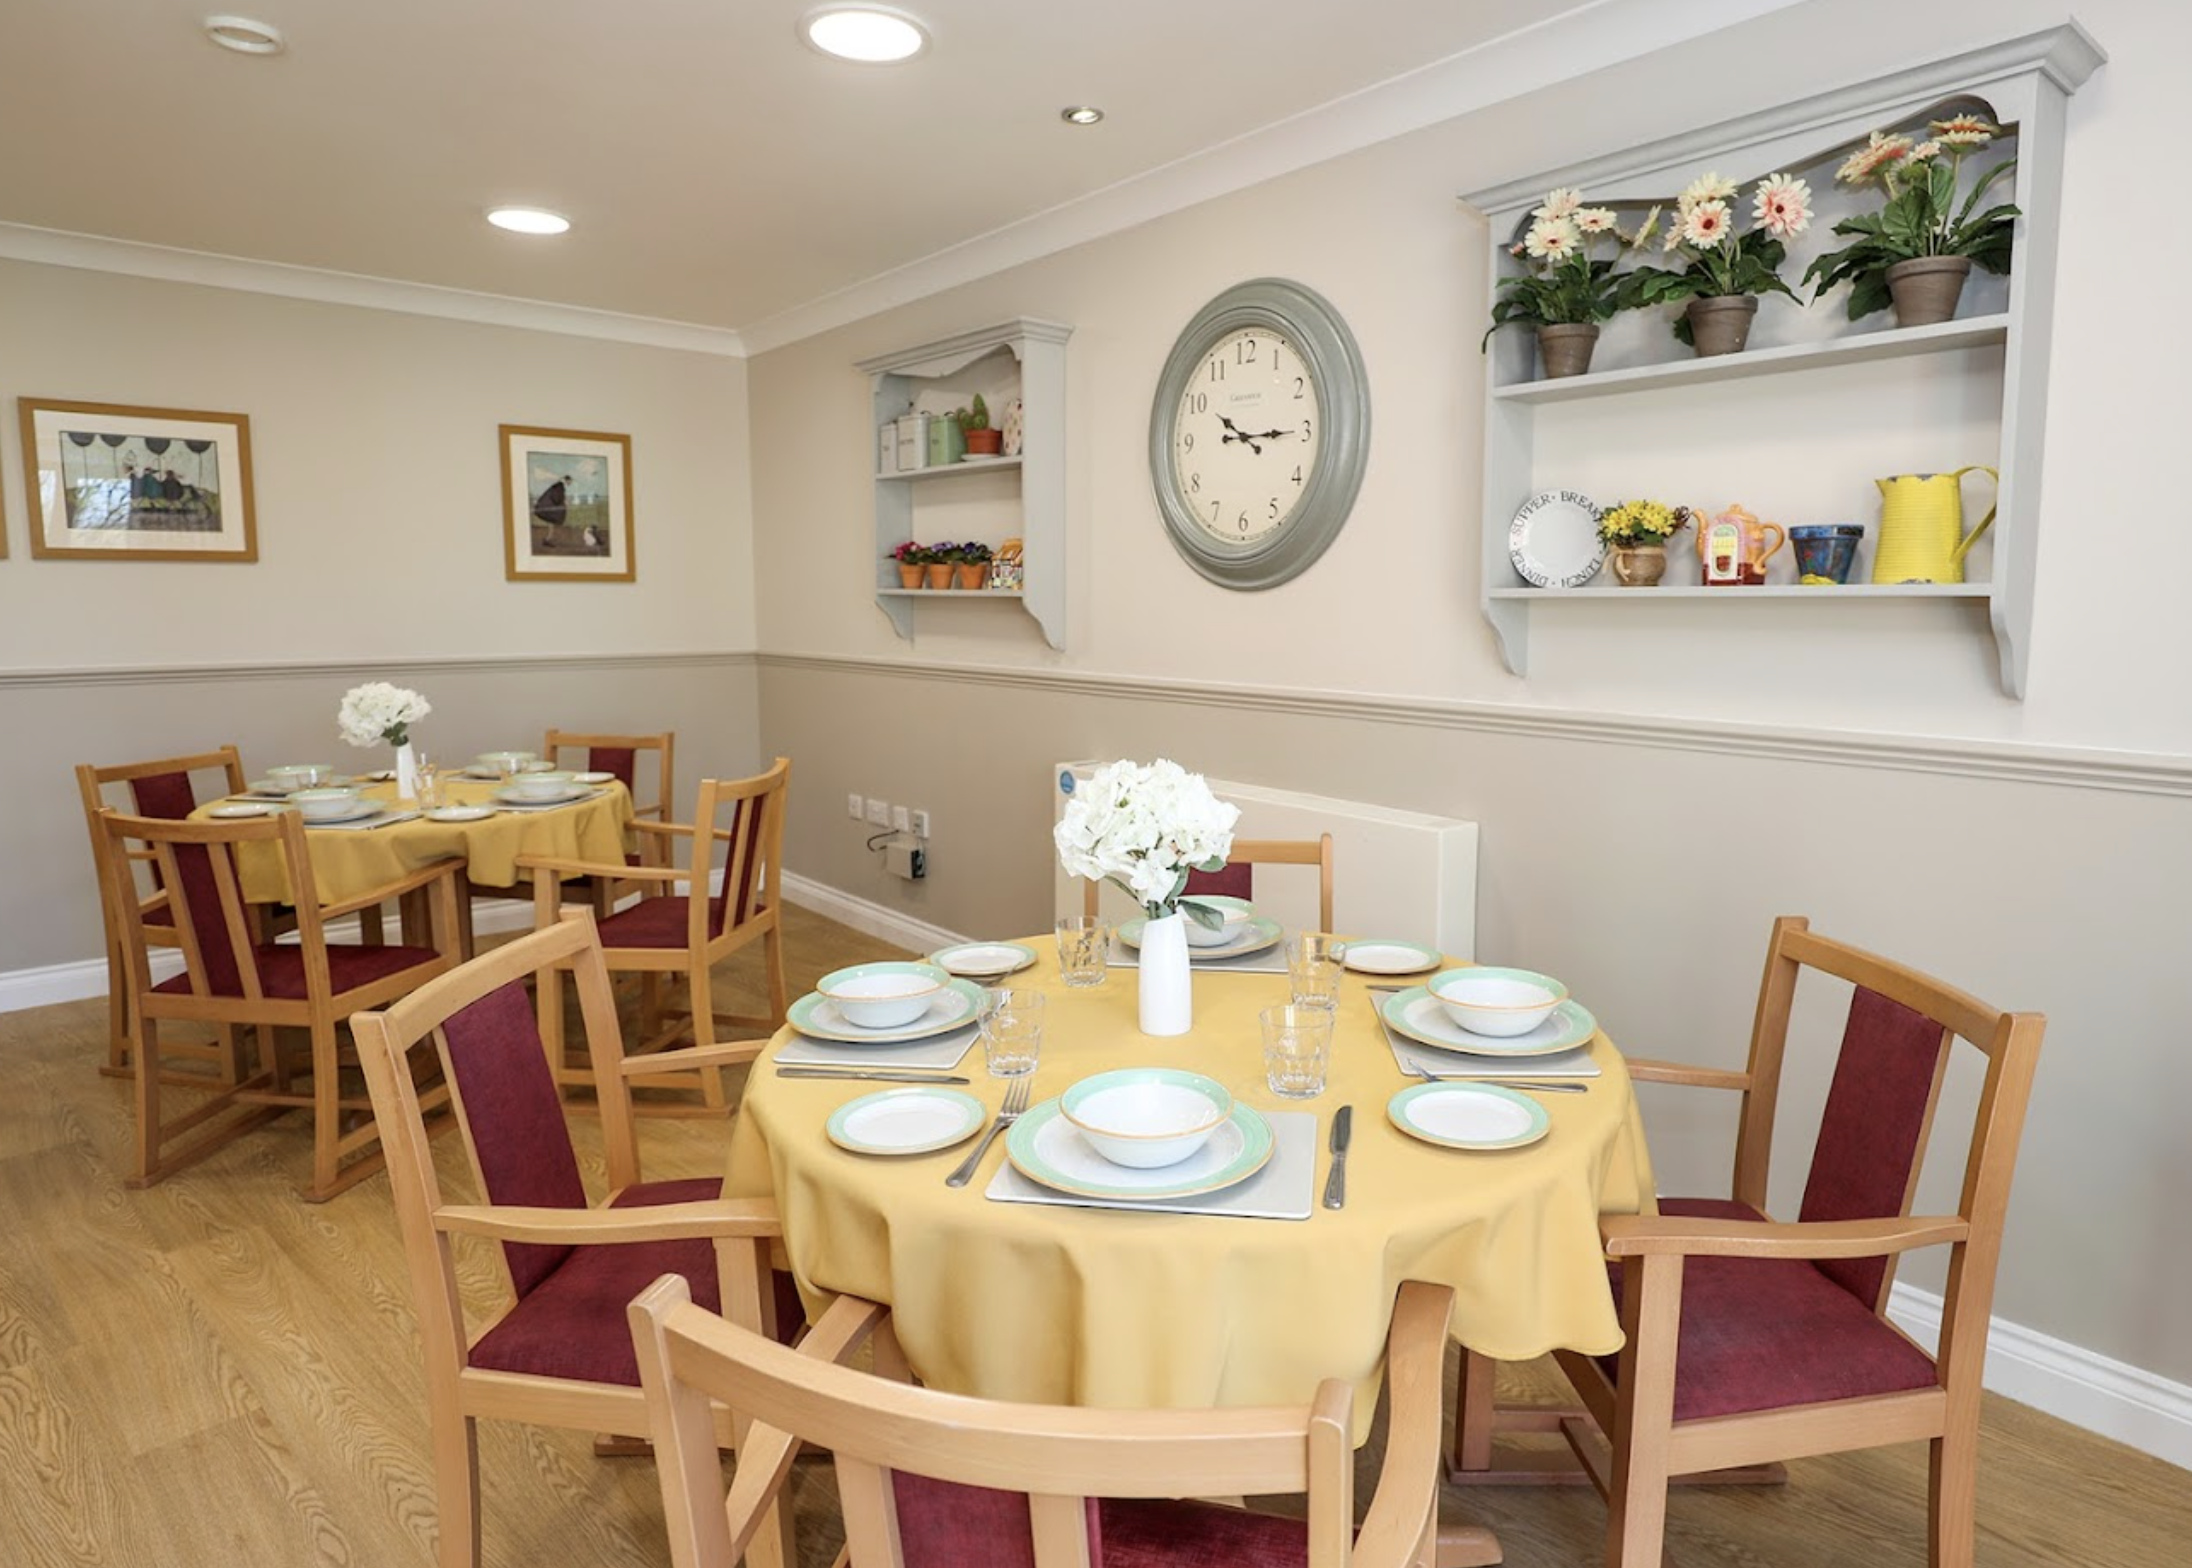 Dining room of Fern Brook Lodge care home in Gillingham, Dorset